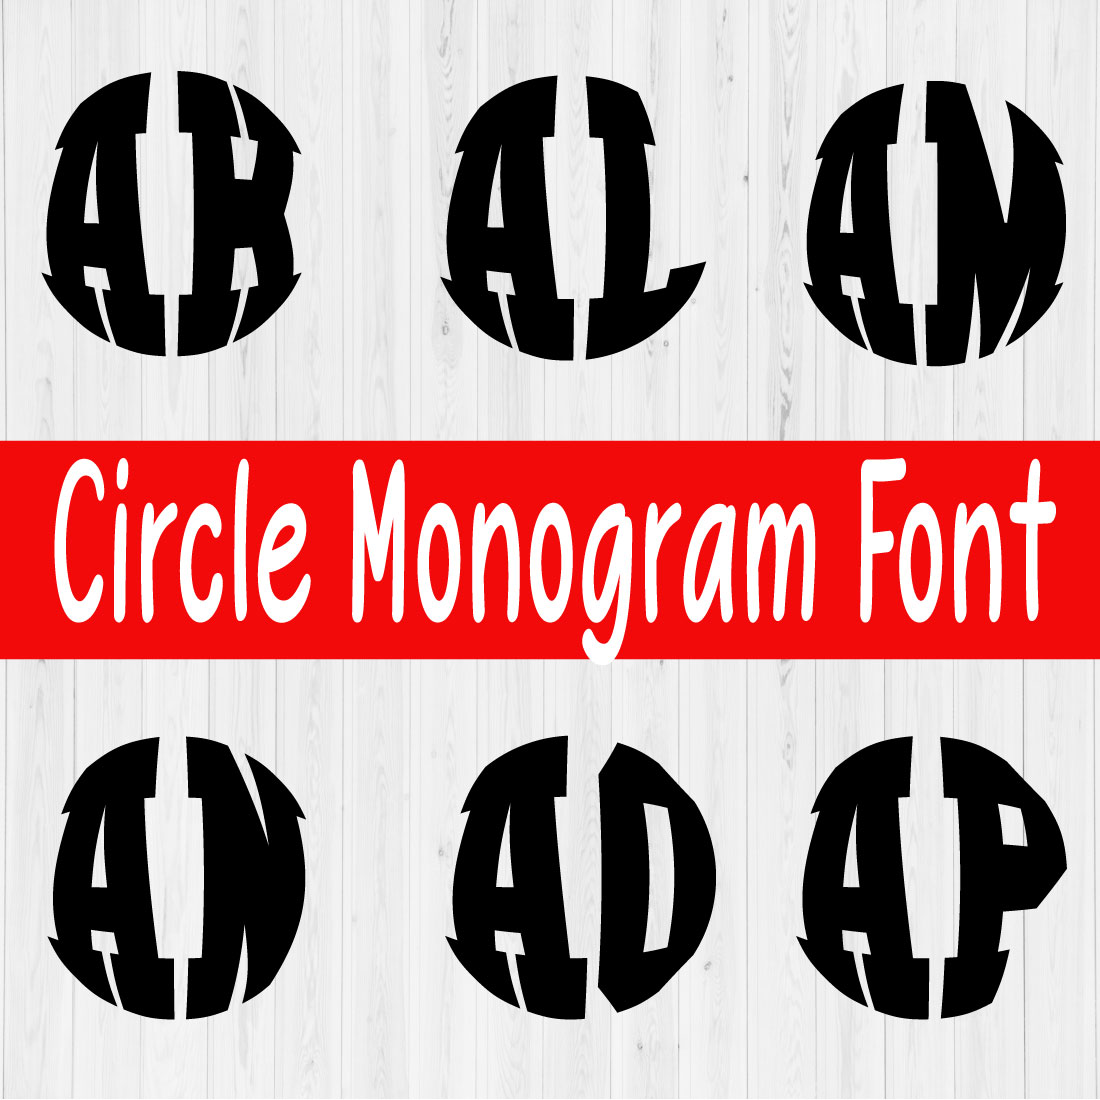 Monogram Font Vol7 cover image.